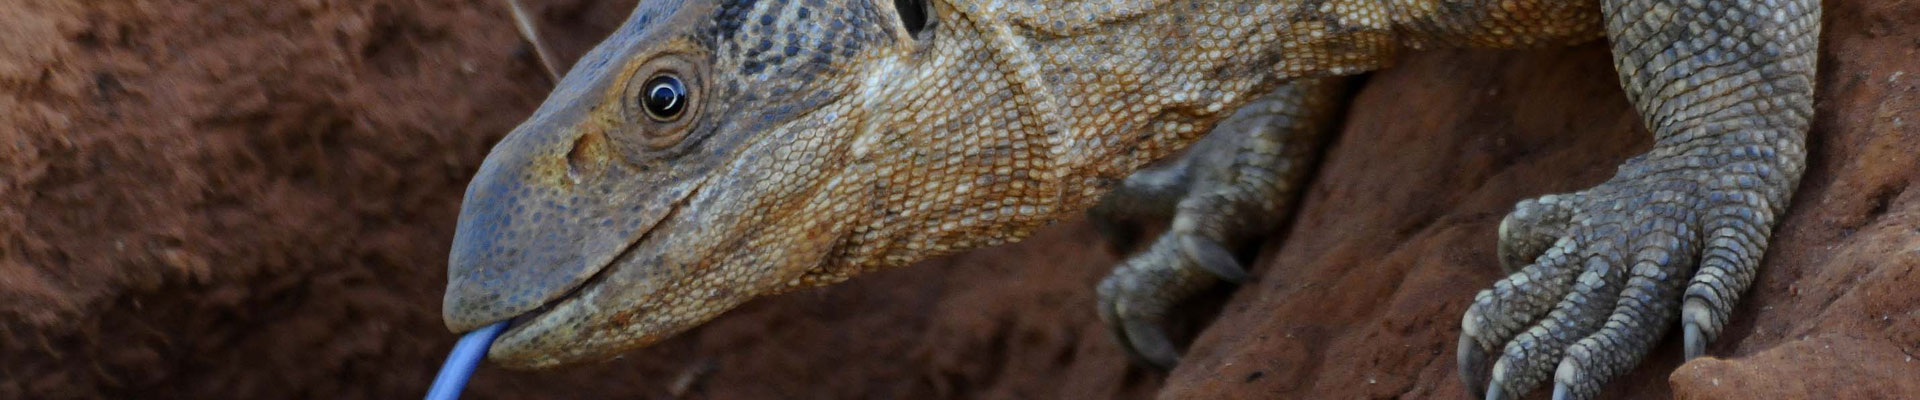 Photograph monitor lizards and other wildlife in Samburu National Reserve in Kenya.